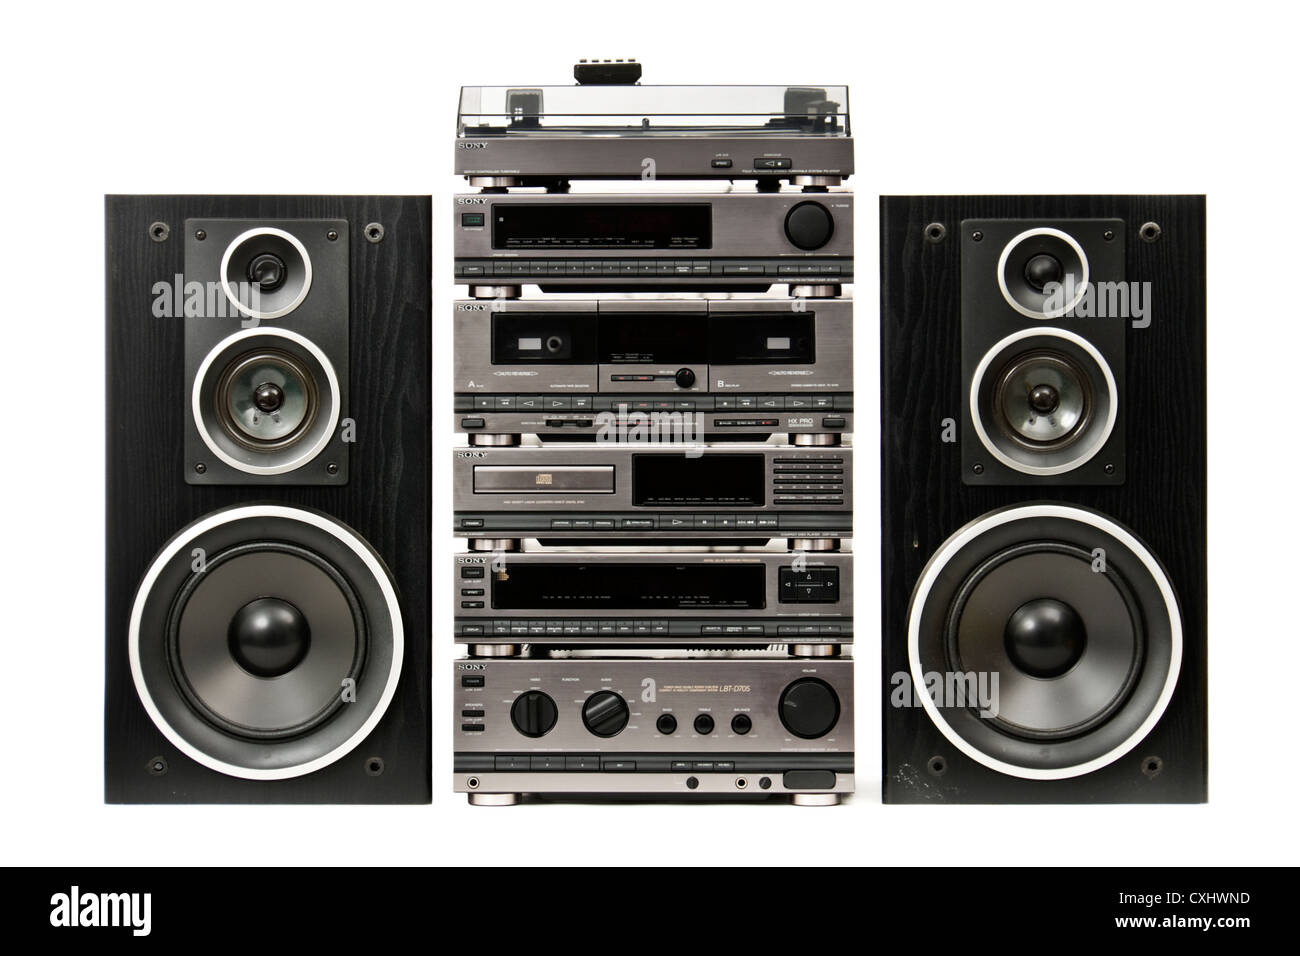 Vintage Sony LBT-D705 integrated Hi-Fi music system Stock Photo - Alamy